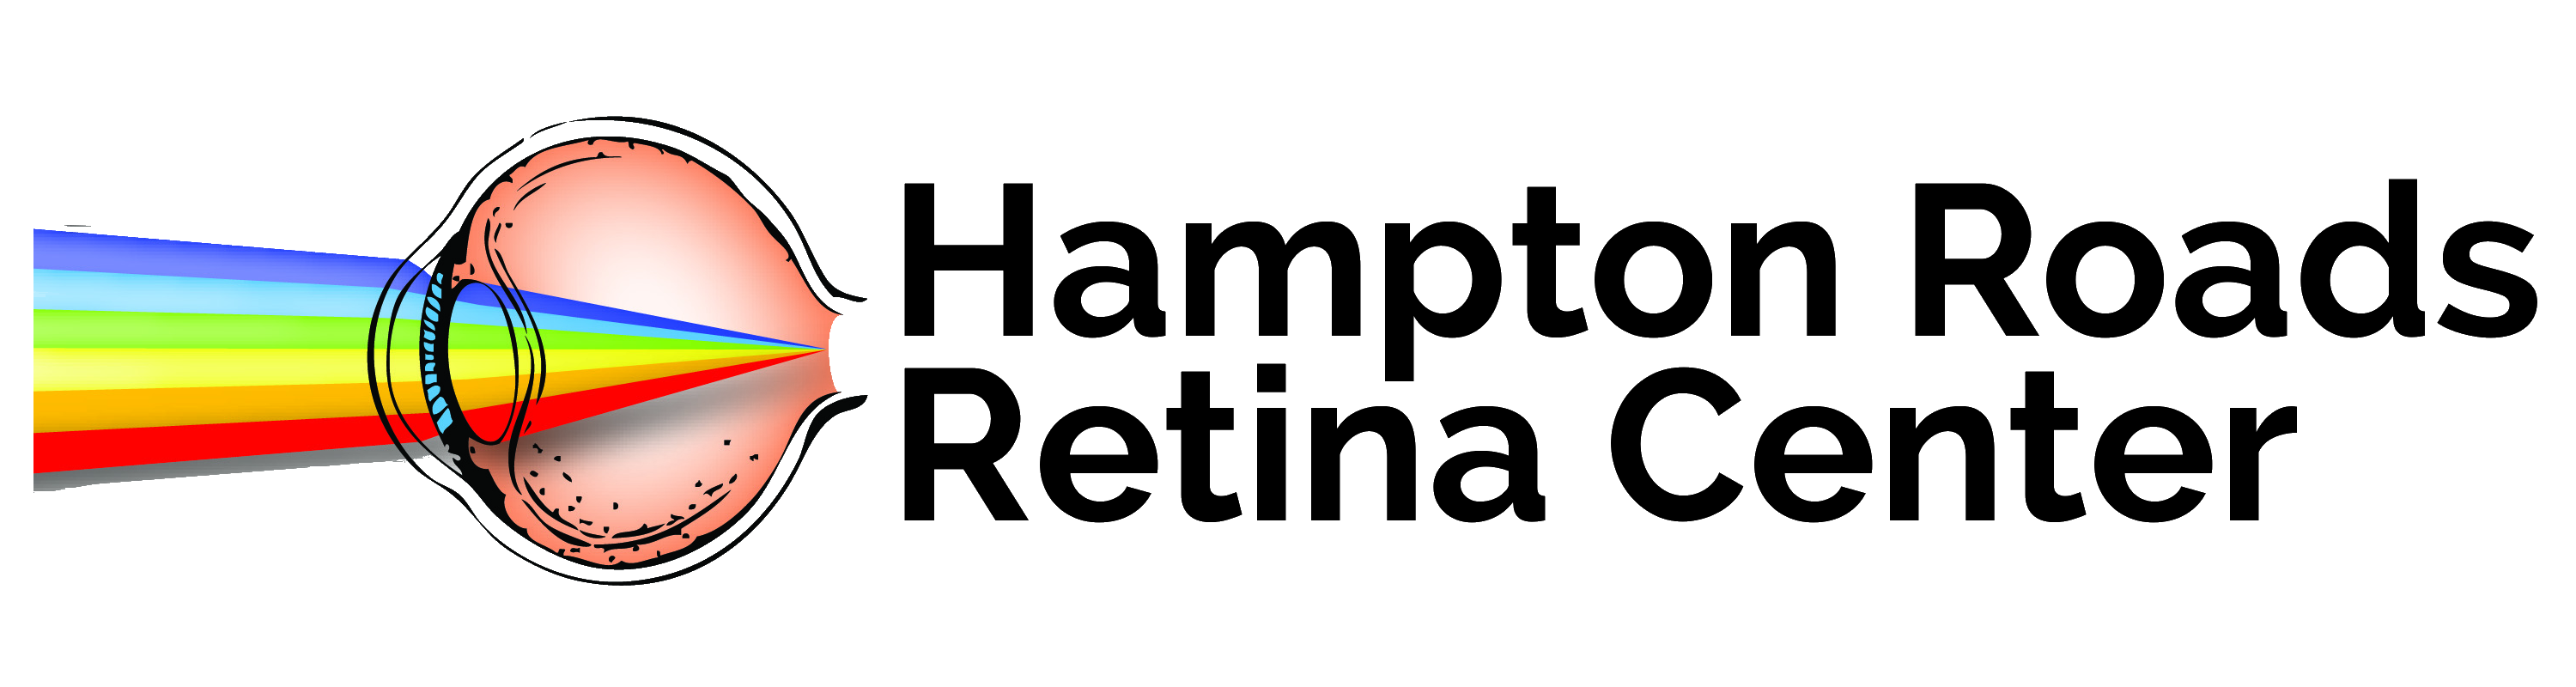 Hampton Roads Retina Center